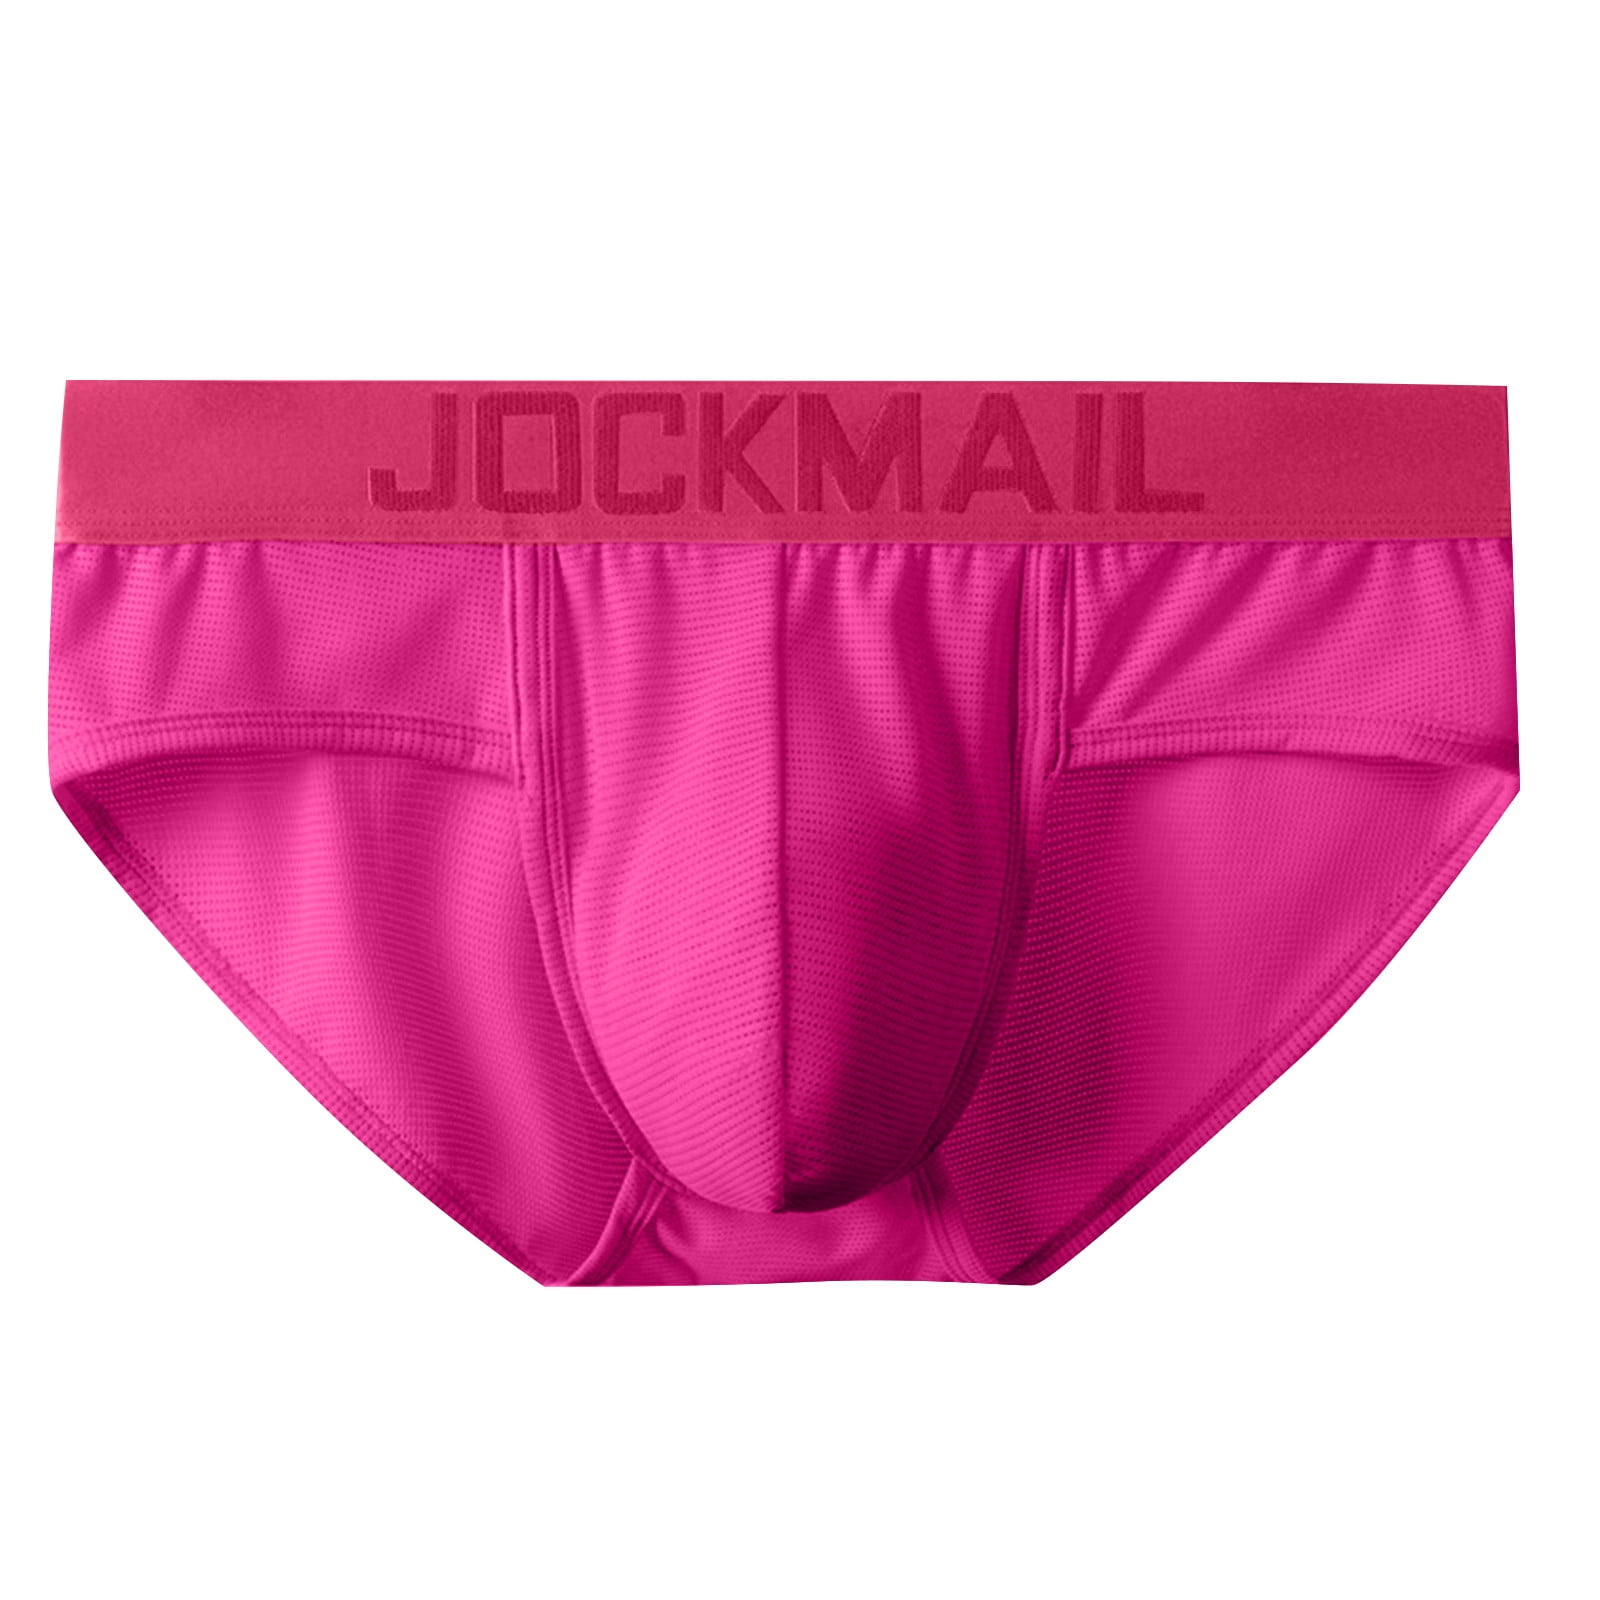 YDKZYMD Briefs for Men Pack 1 Jock Strap Stretchy Sexy Pouch Underwear ...